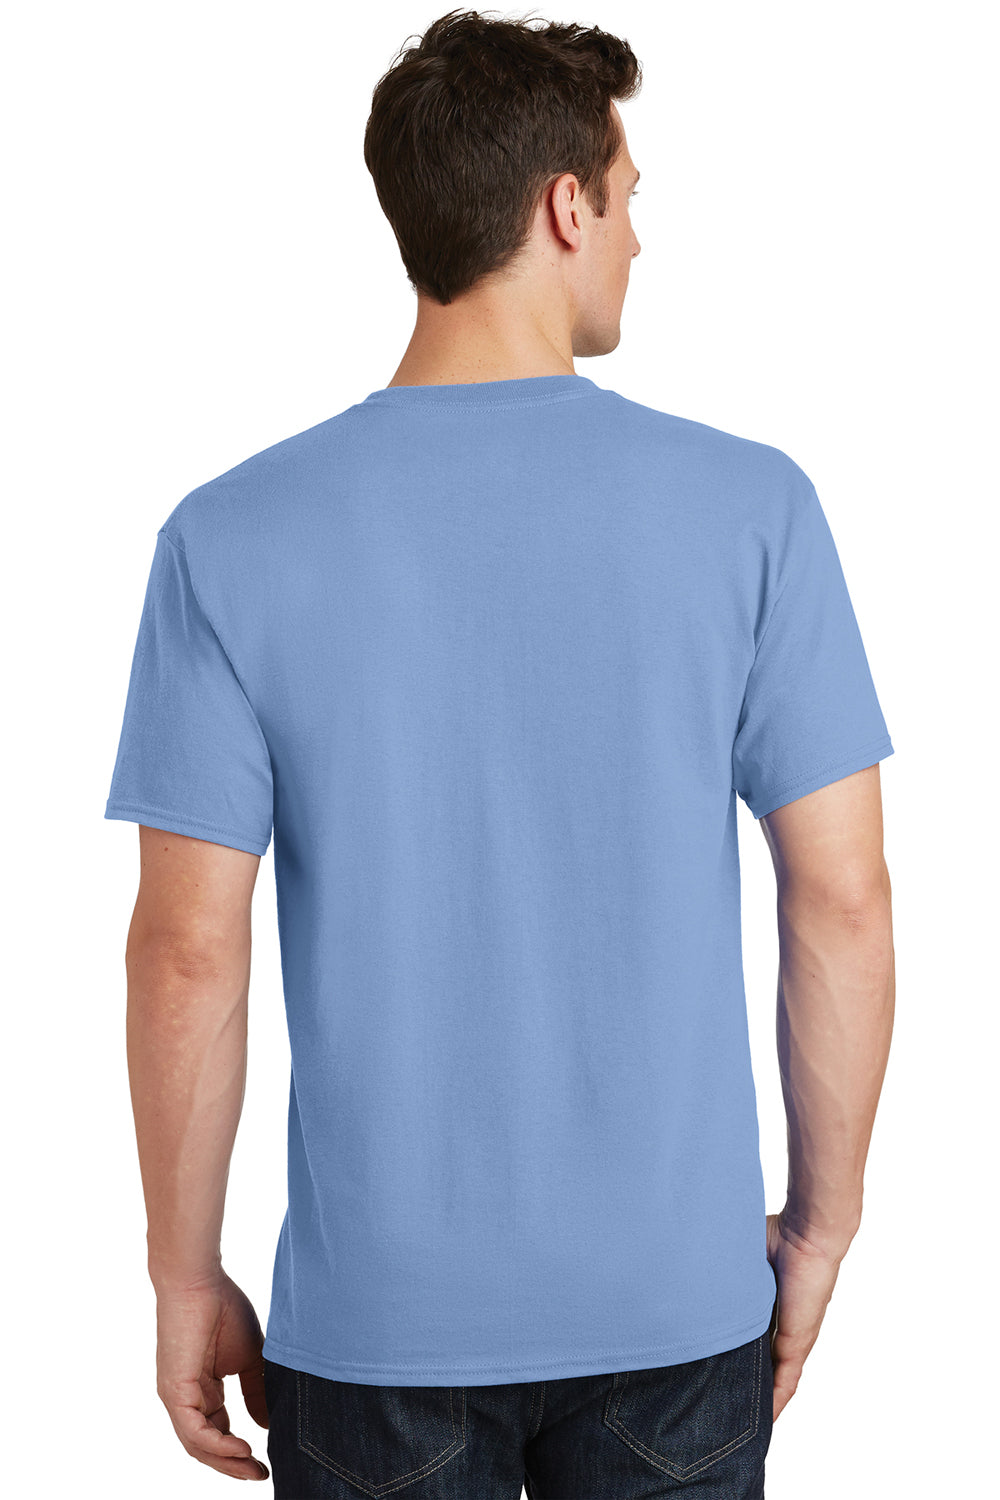 Port & Company PC54 Mens Core Short Sleeve Crewneck T-Shirt Light Blue Back